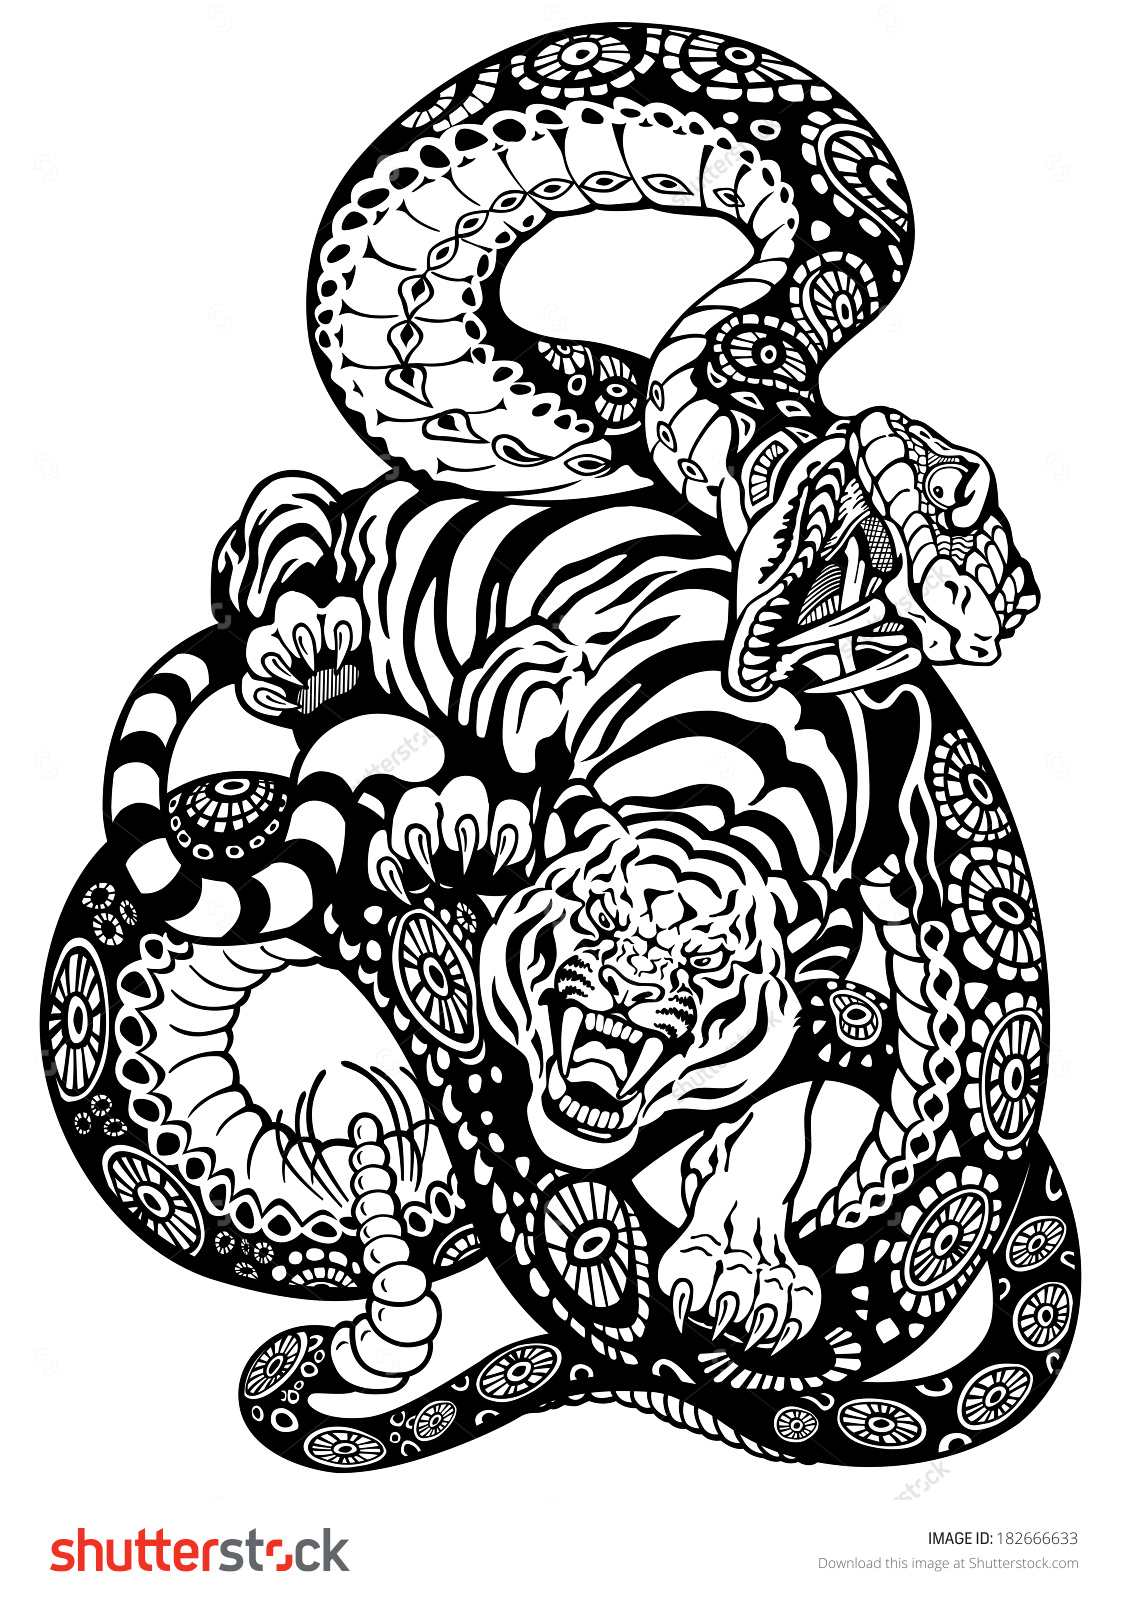 tiger-snake-coloring-download-tiger-snake-coloring-for-free-2019